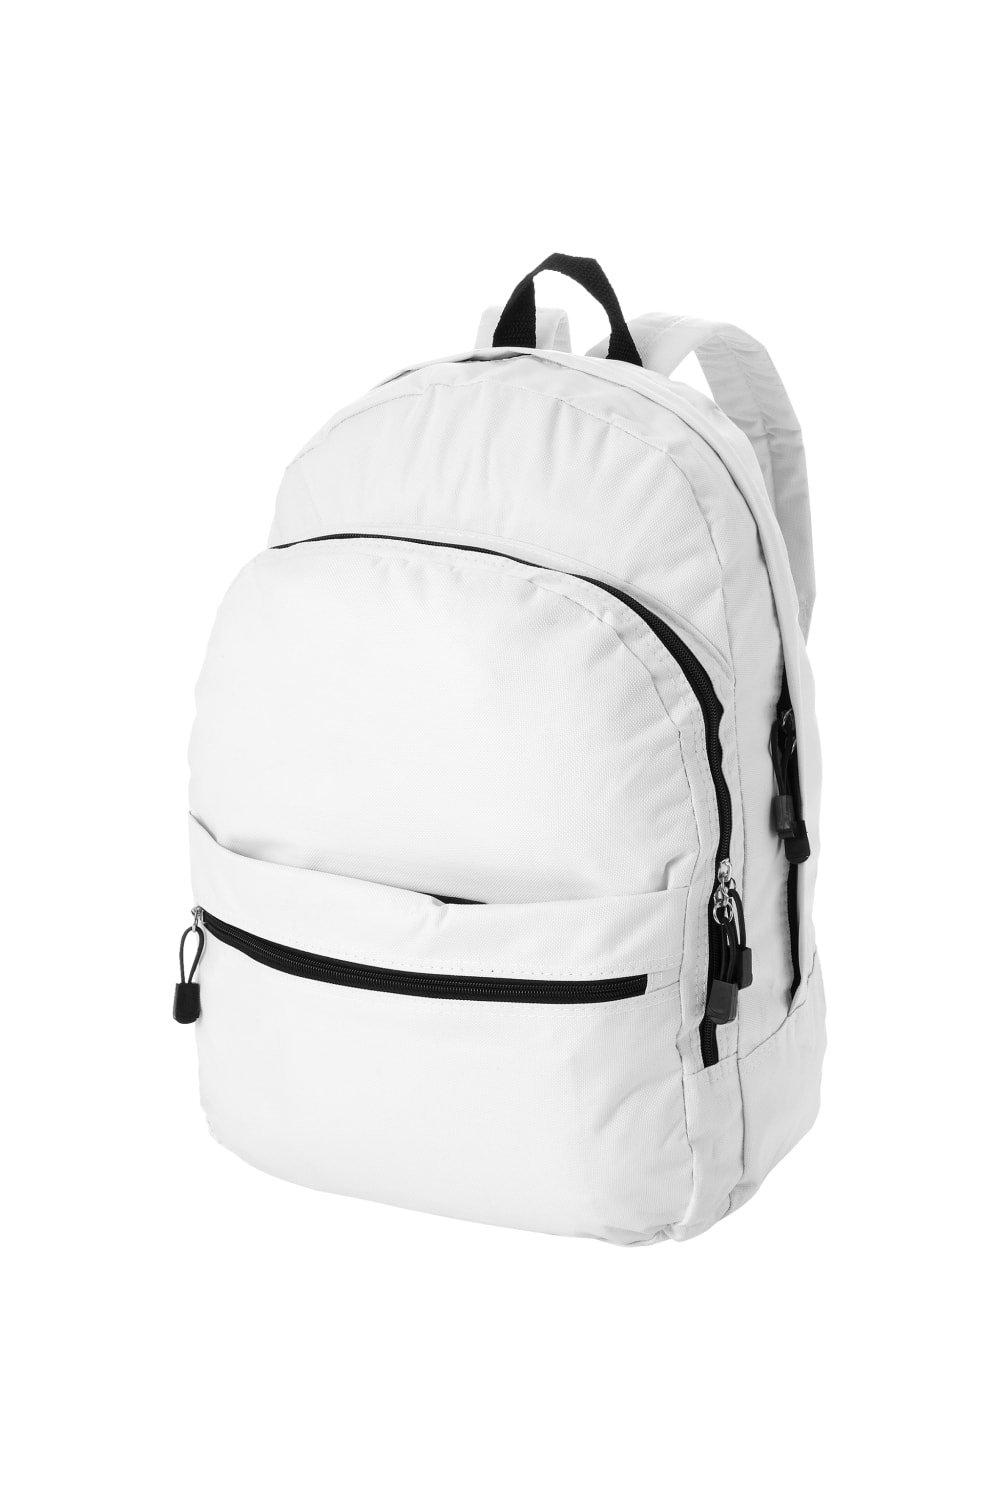 Рюкзак Trend (2 шт.) Bullet, белый рюкзак с карманом единорог